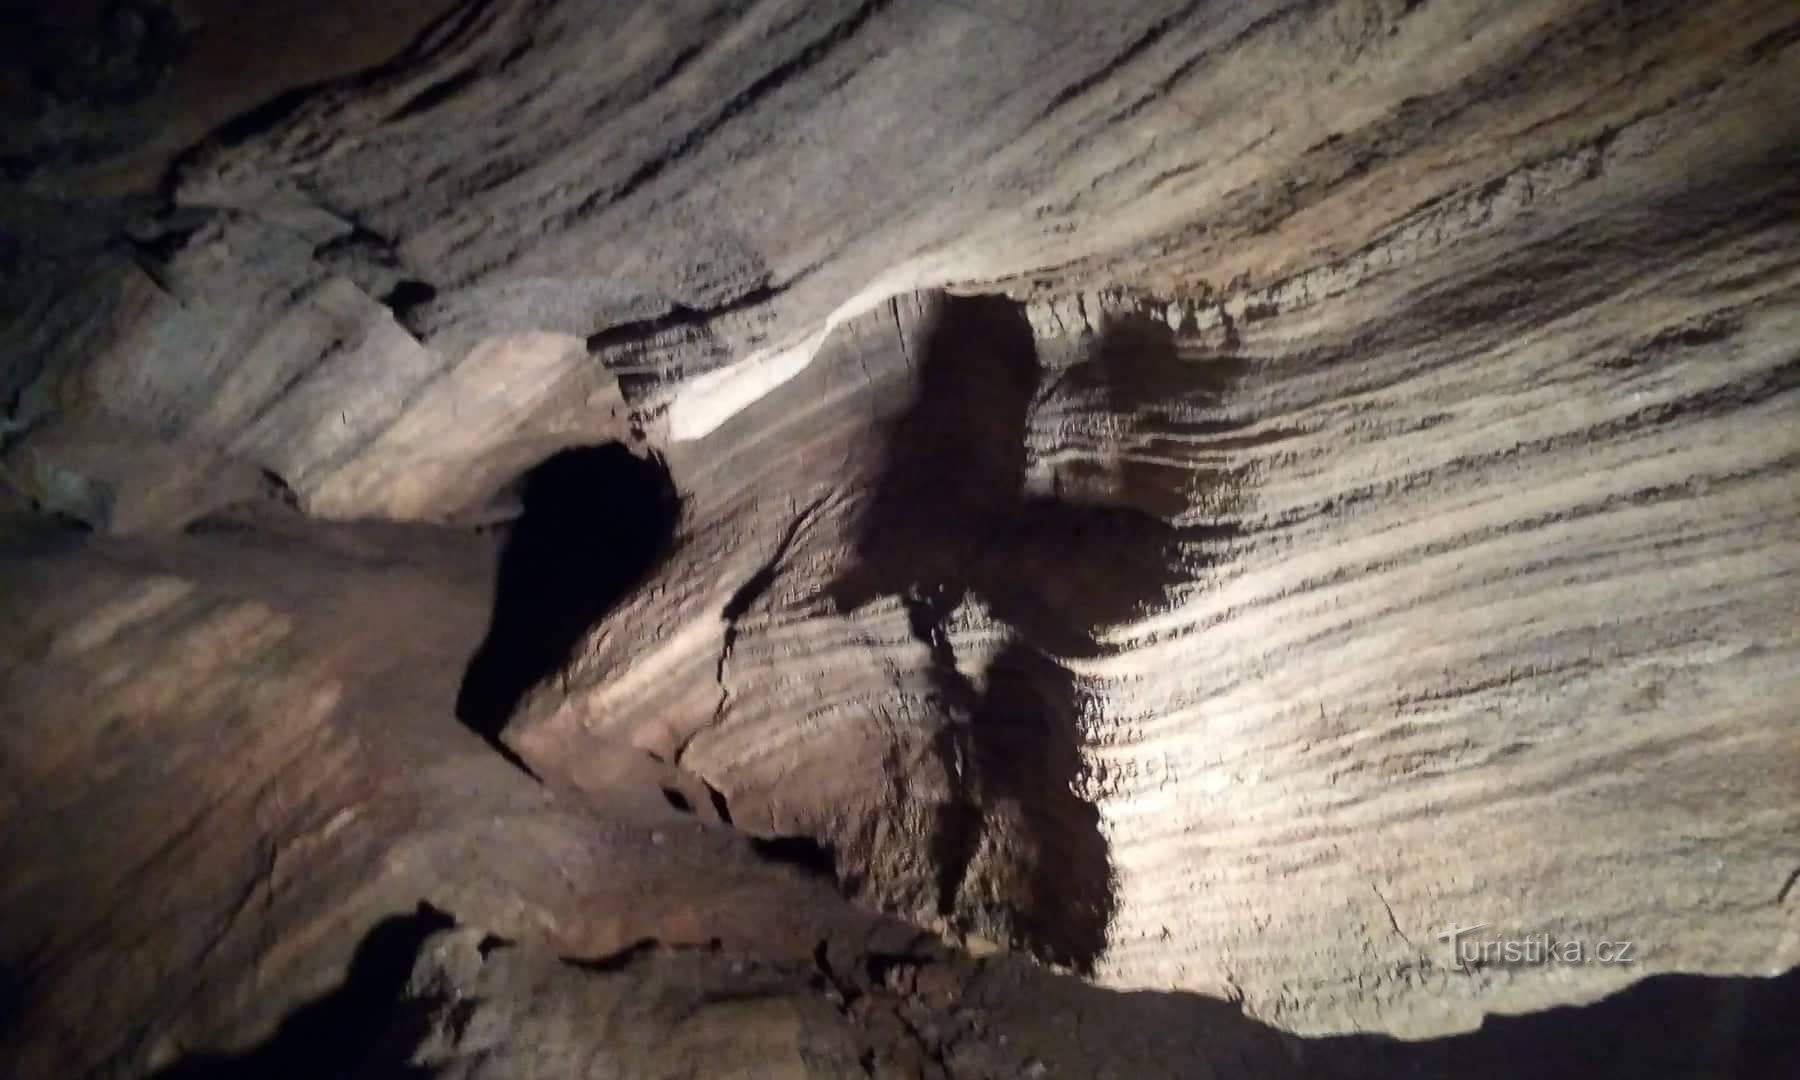 Grotta di Chýnov